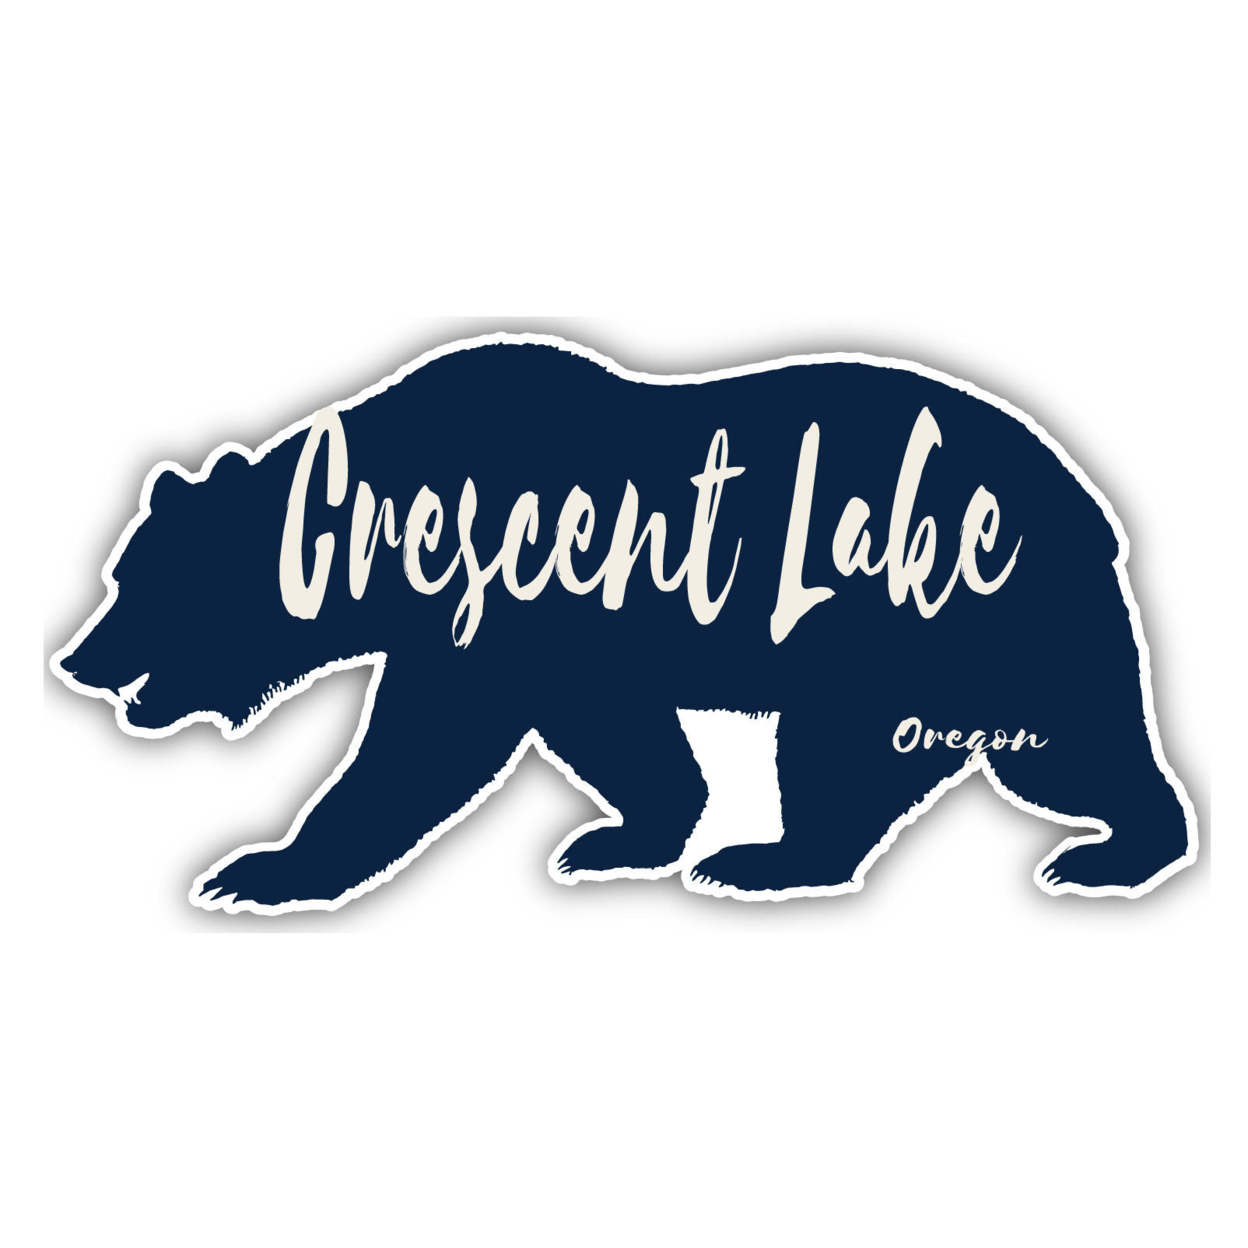 Crescent Lake Oregon Souvenir Decorative Stickers (Choose Theme And Size) - 4-Pack, 2-Inch, Tent